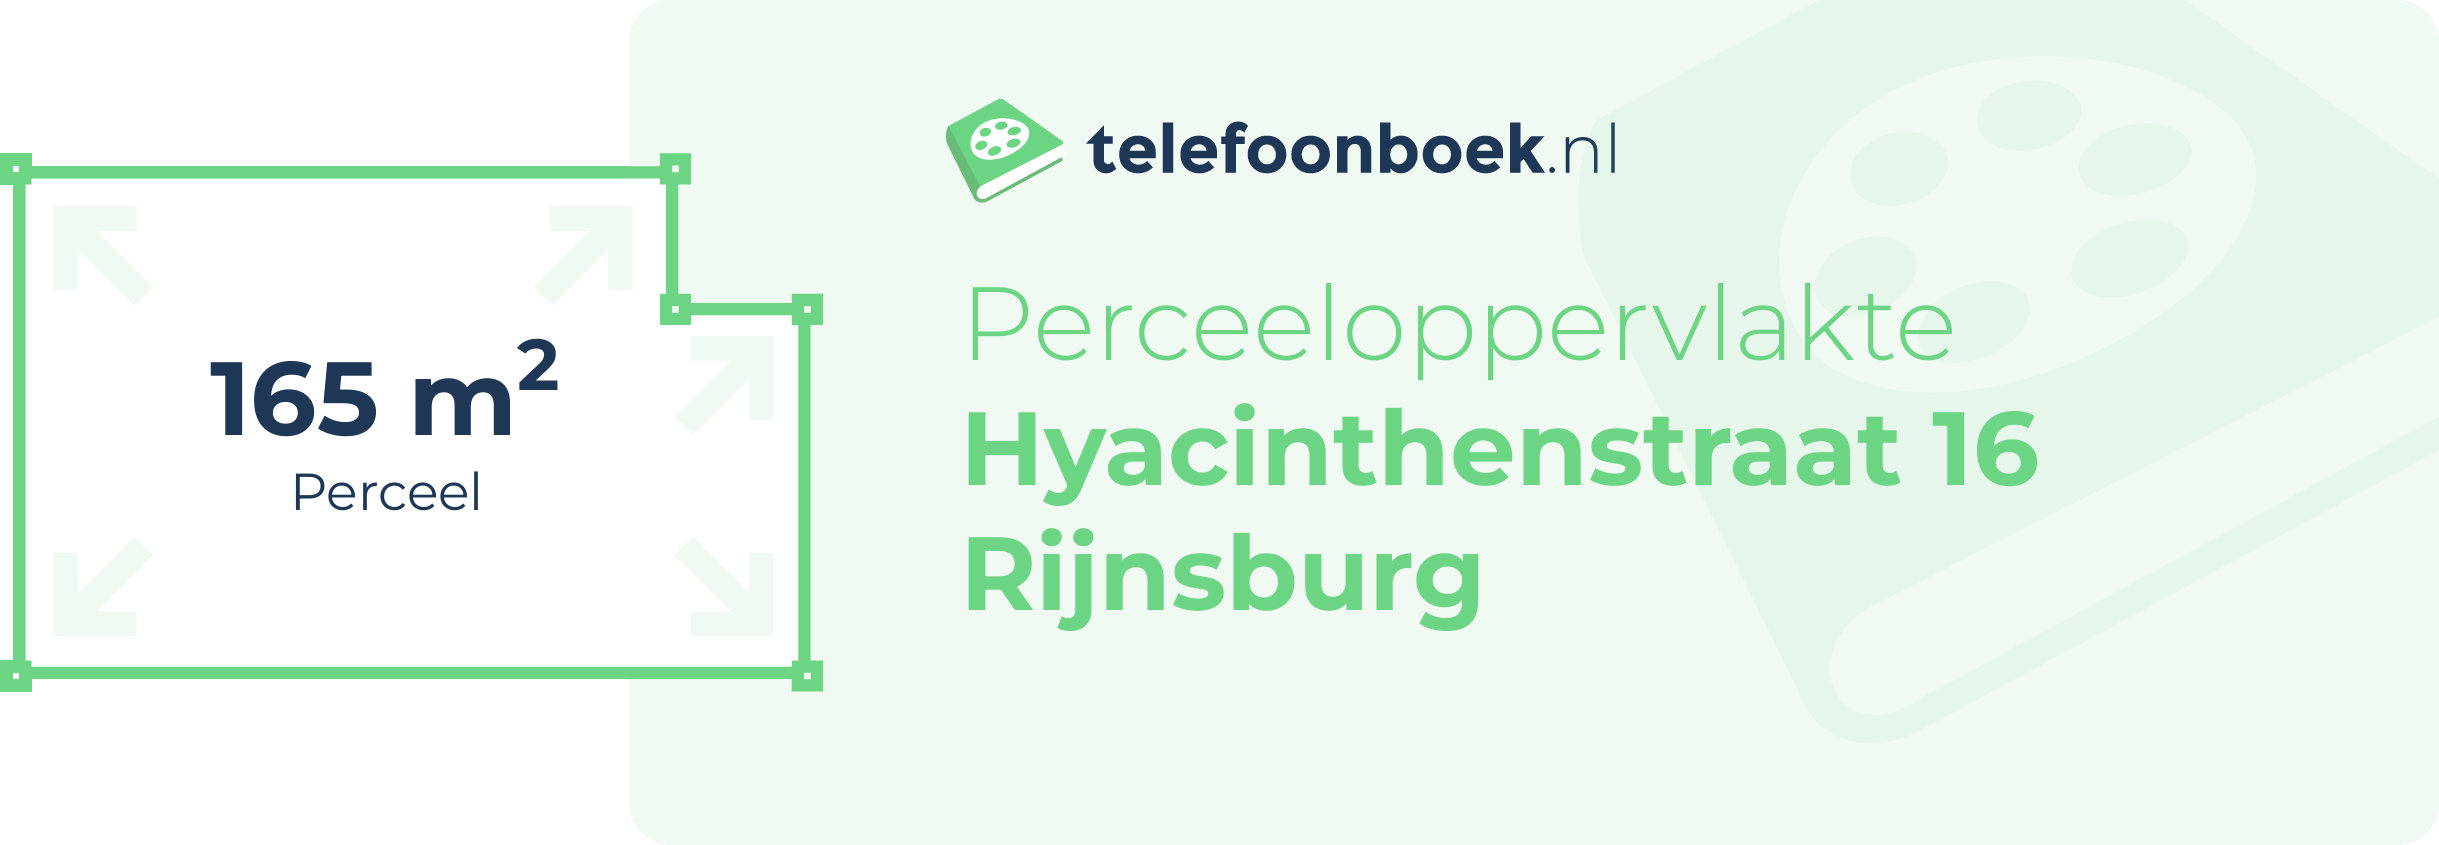 Perceeloppervlakte Hyacinthenstraat 16 Rijnsburg